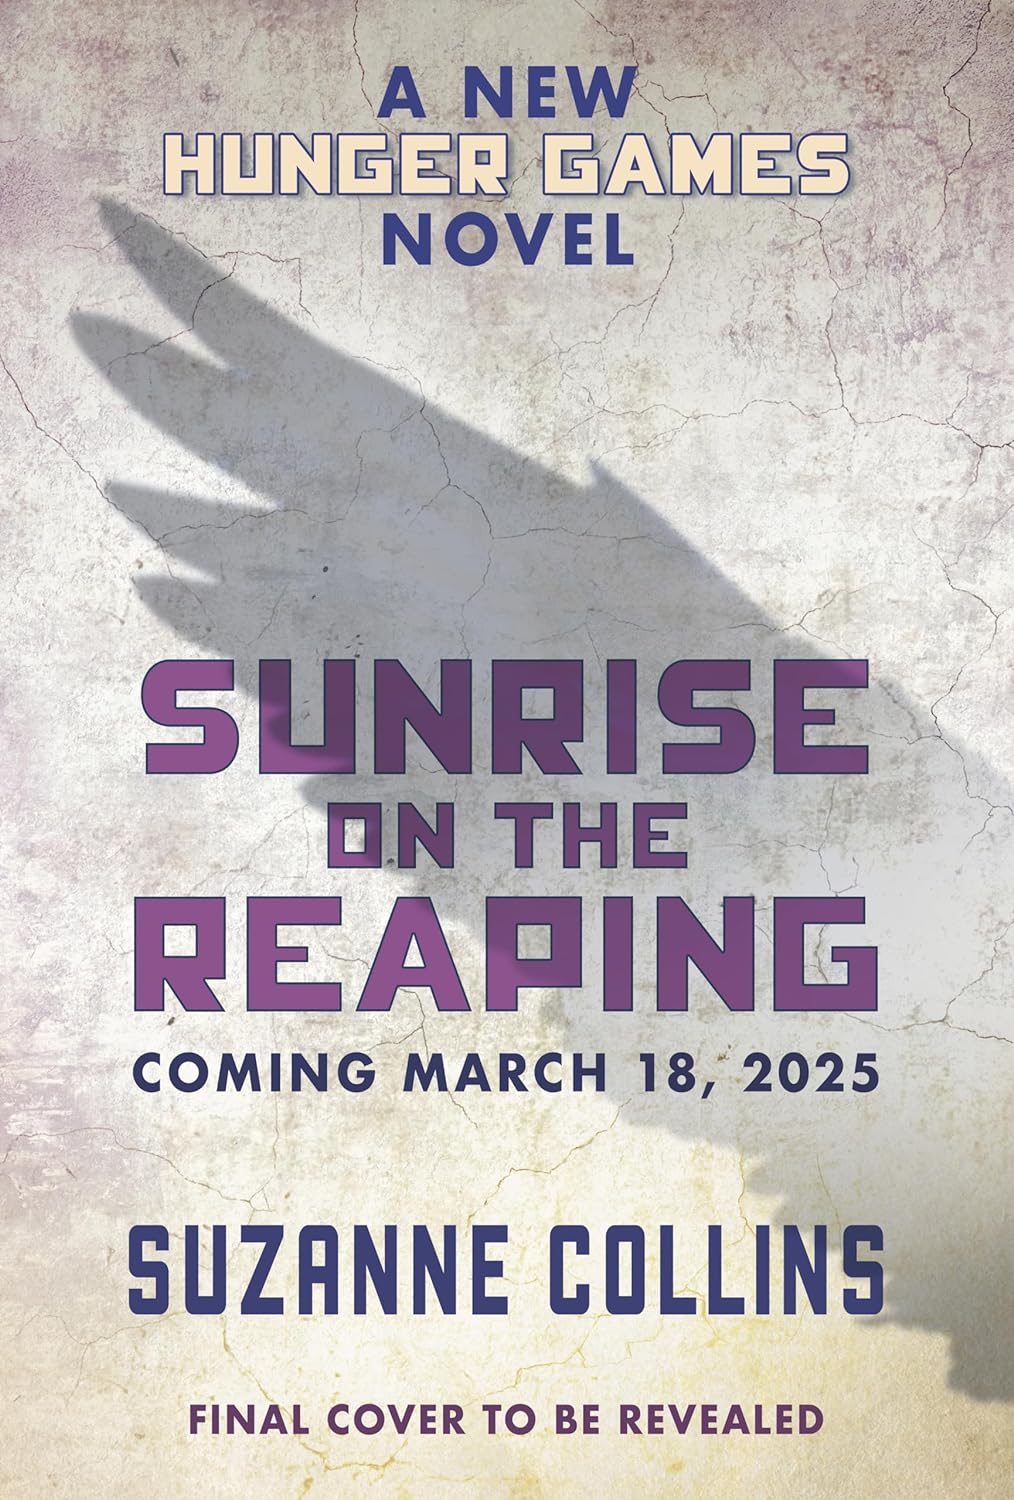 Sunrise on the Reaping (A Hunger Games Novel)